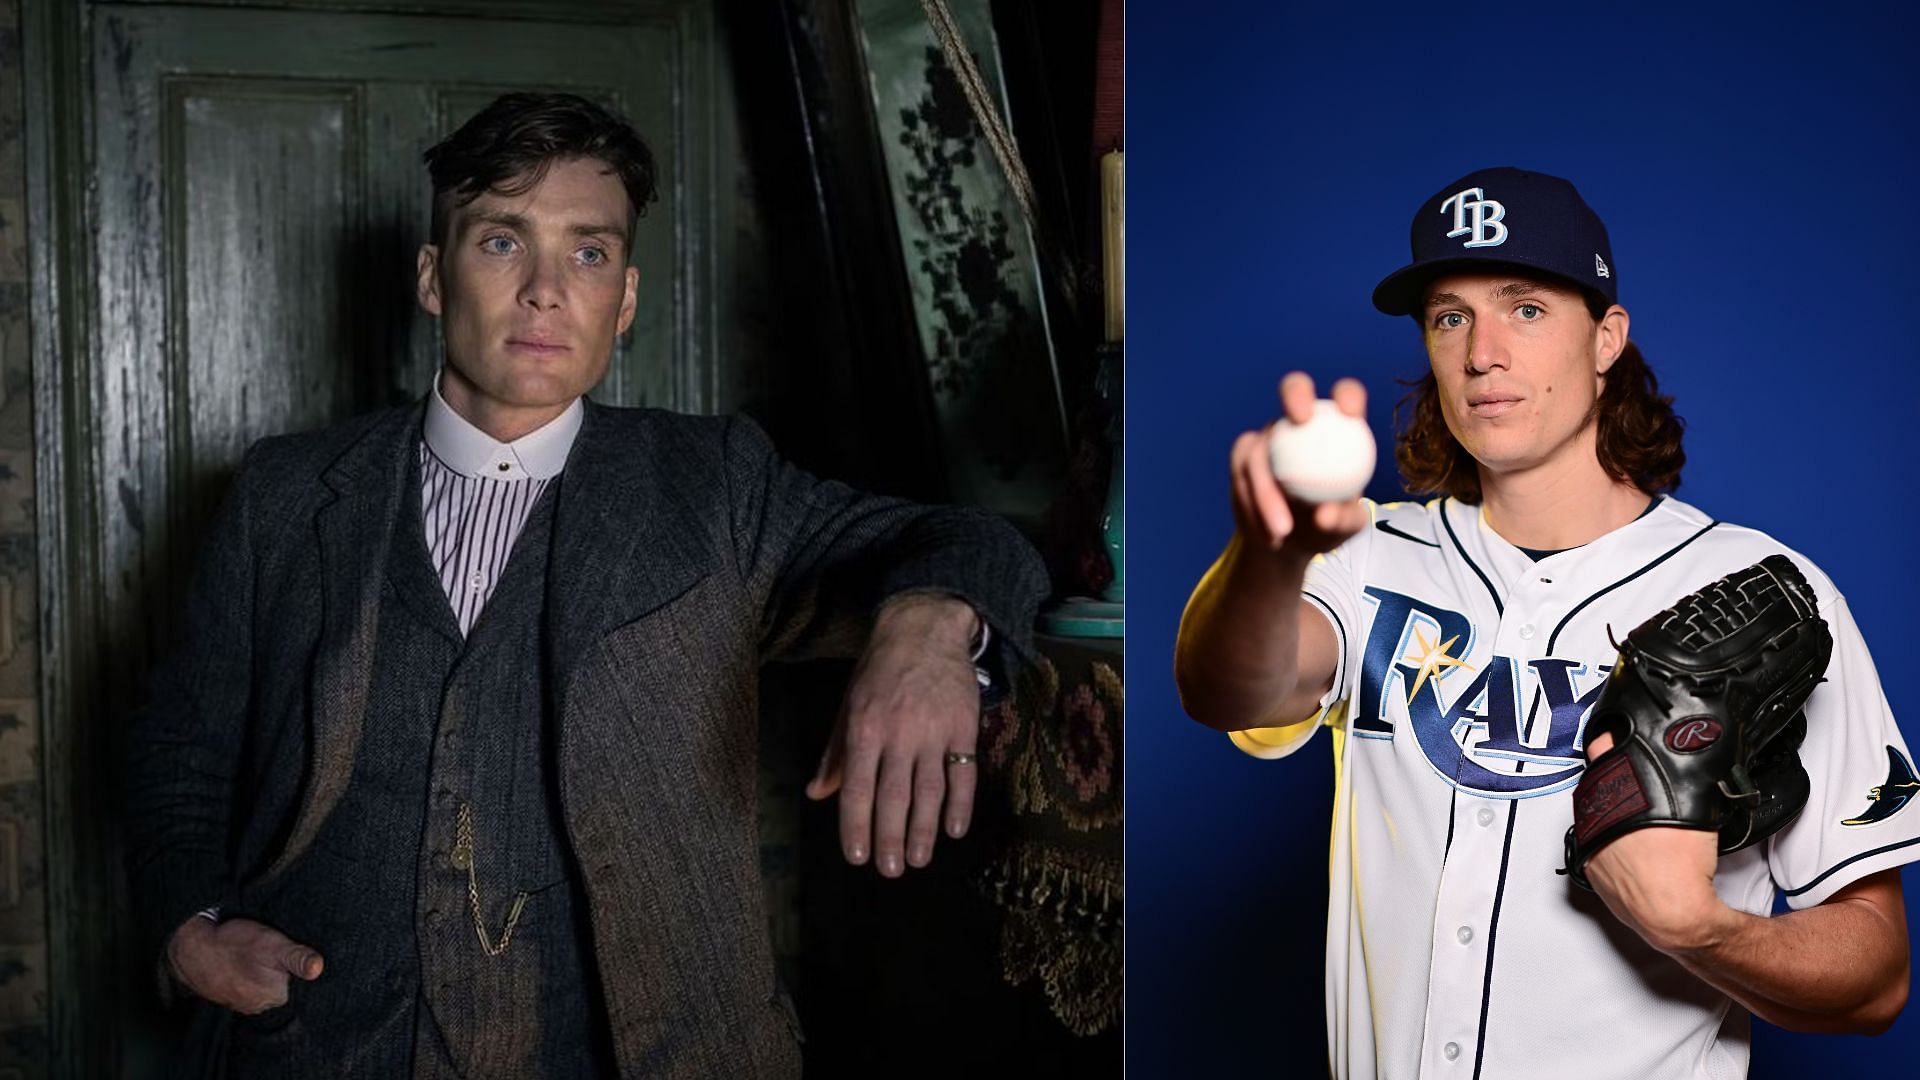 MLB Twitter has likened Rays pitcher Tyler Glasnow to actorn Cillian Murphy